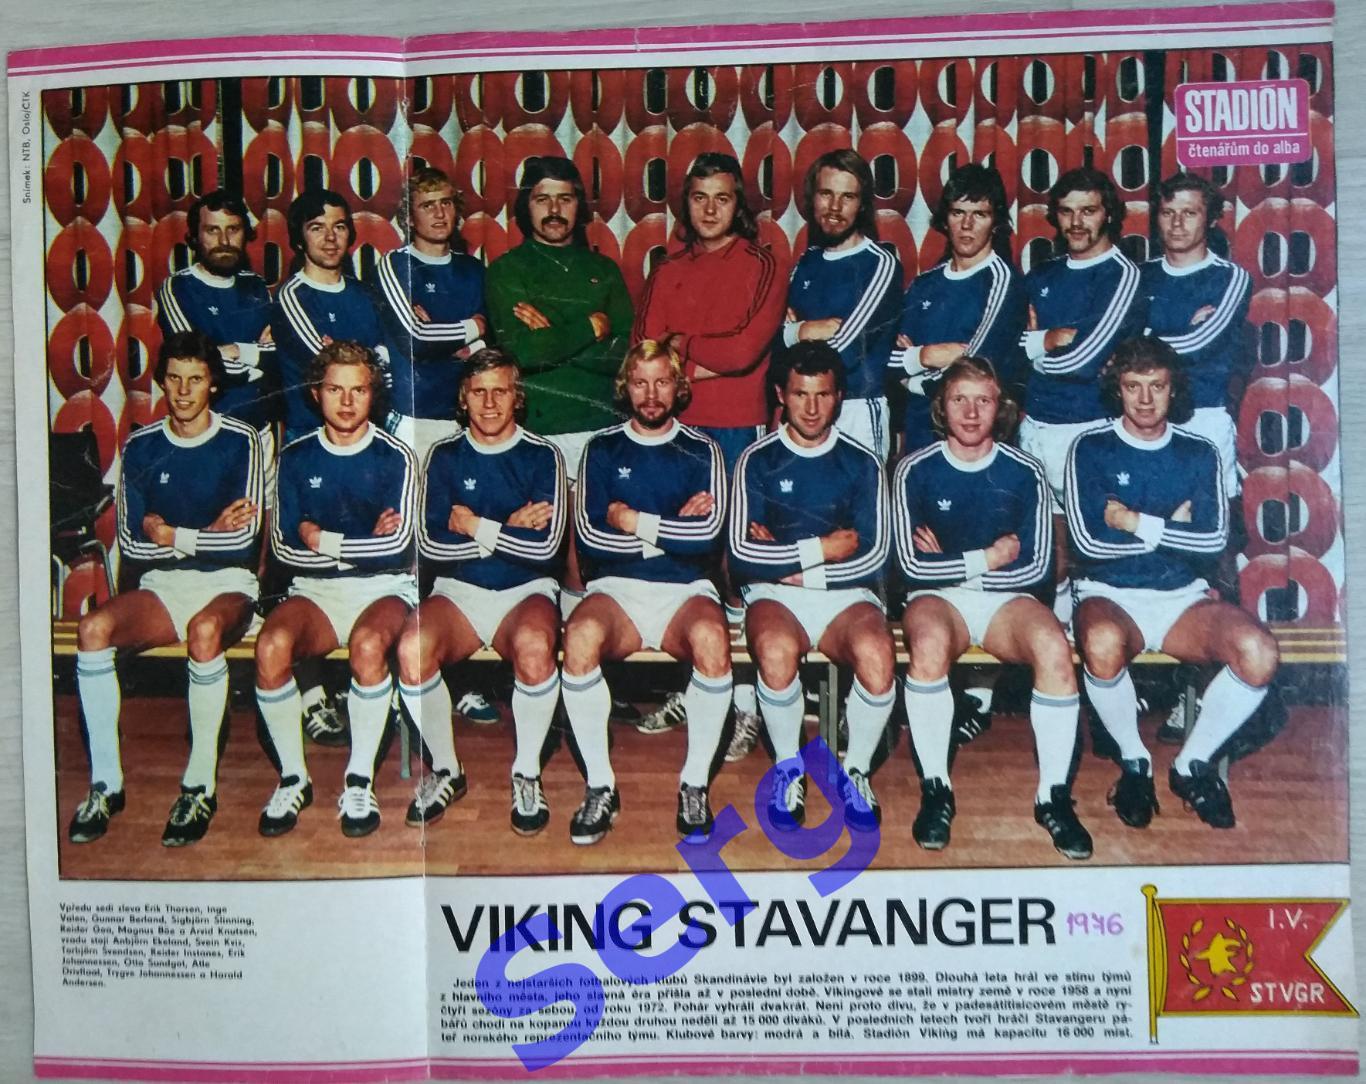 Постер Викинг Ставангер, Норвегия из журнала Стадион (Stadion)